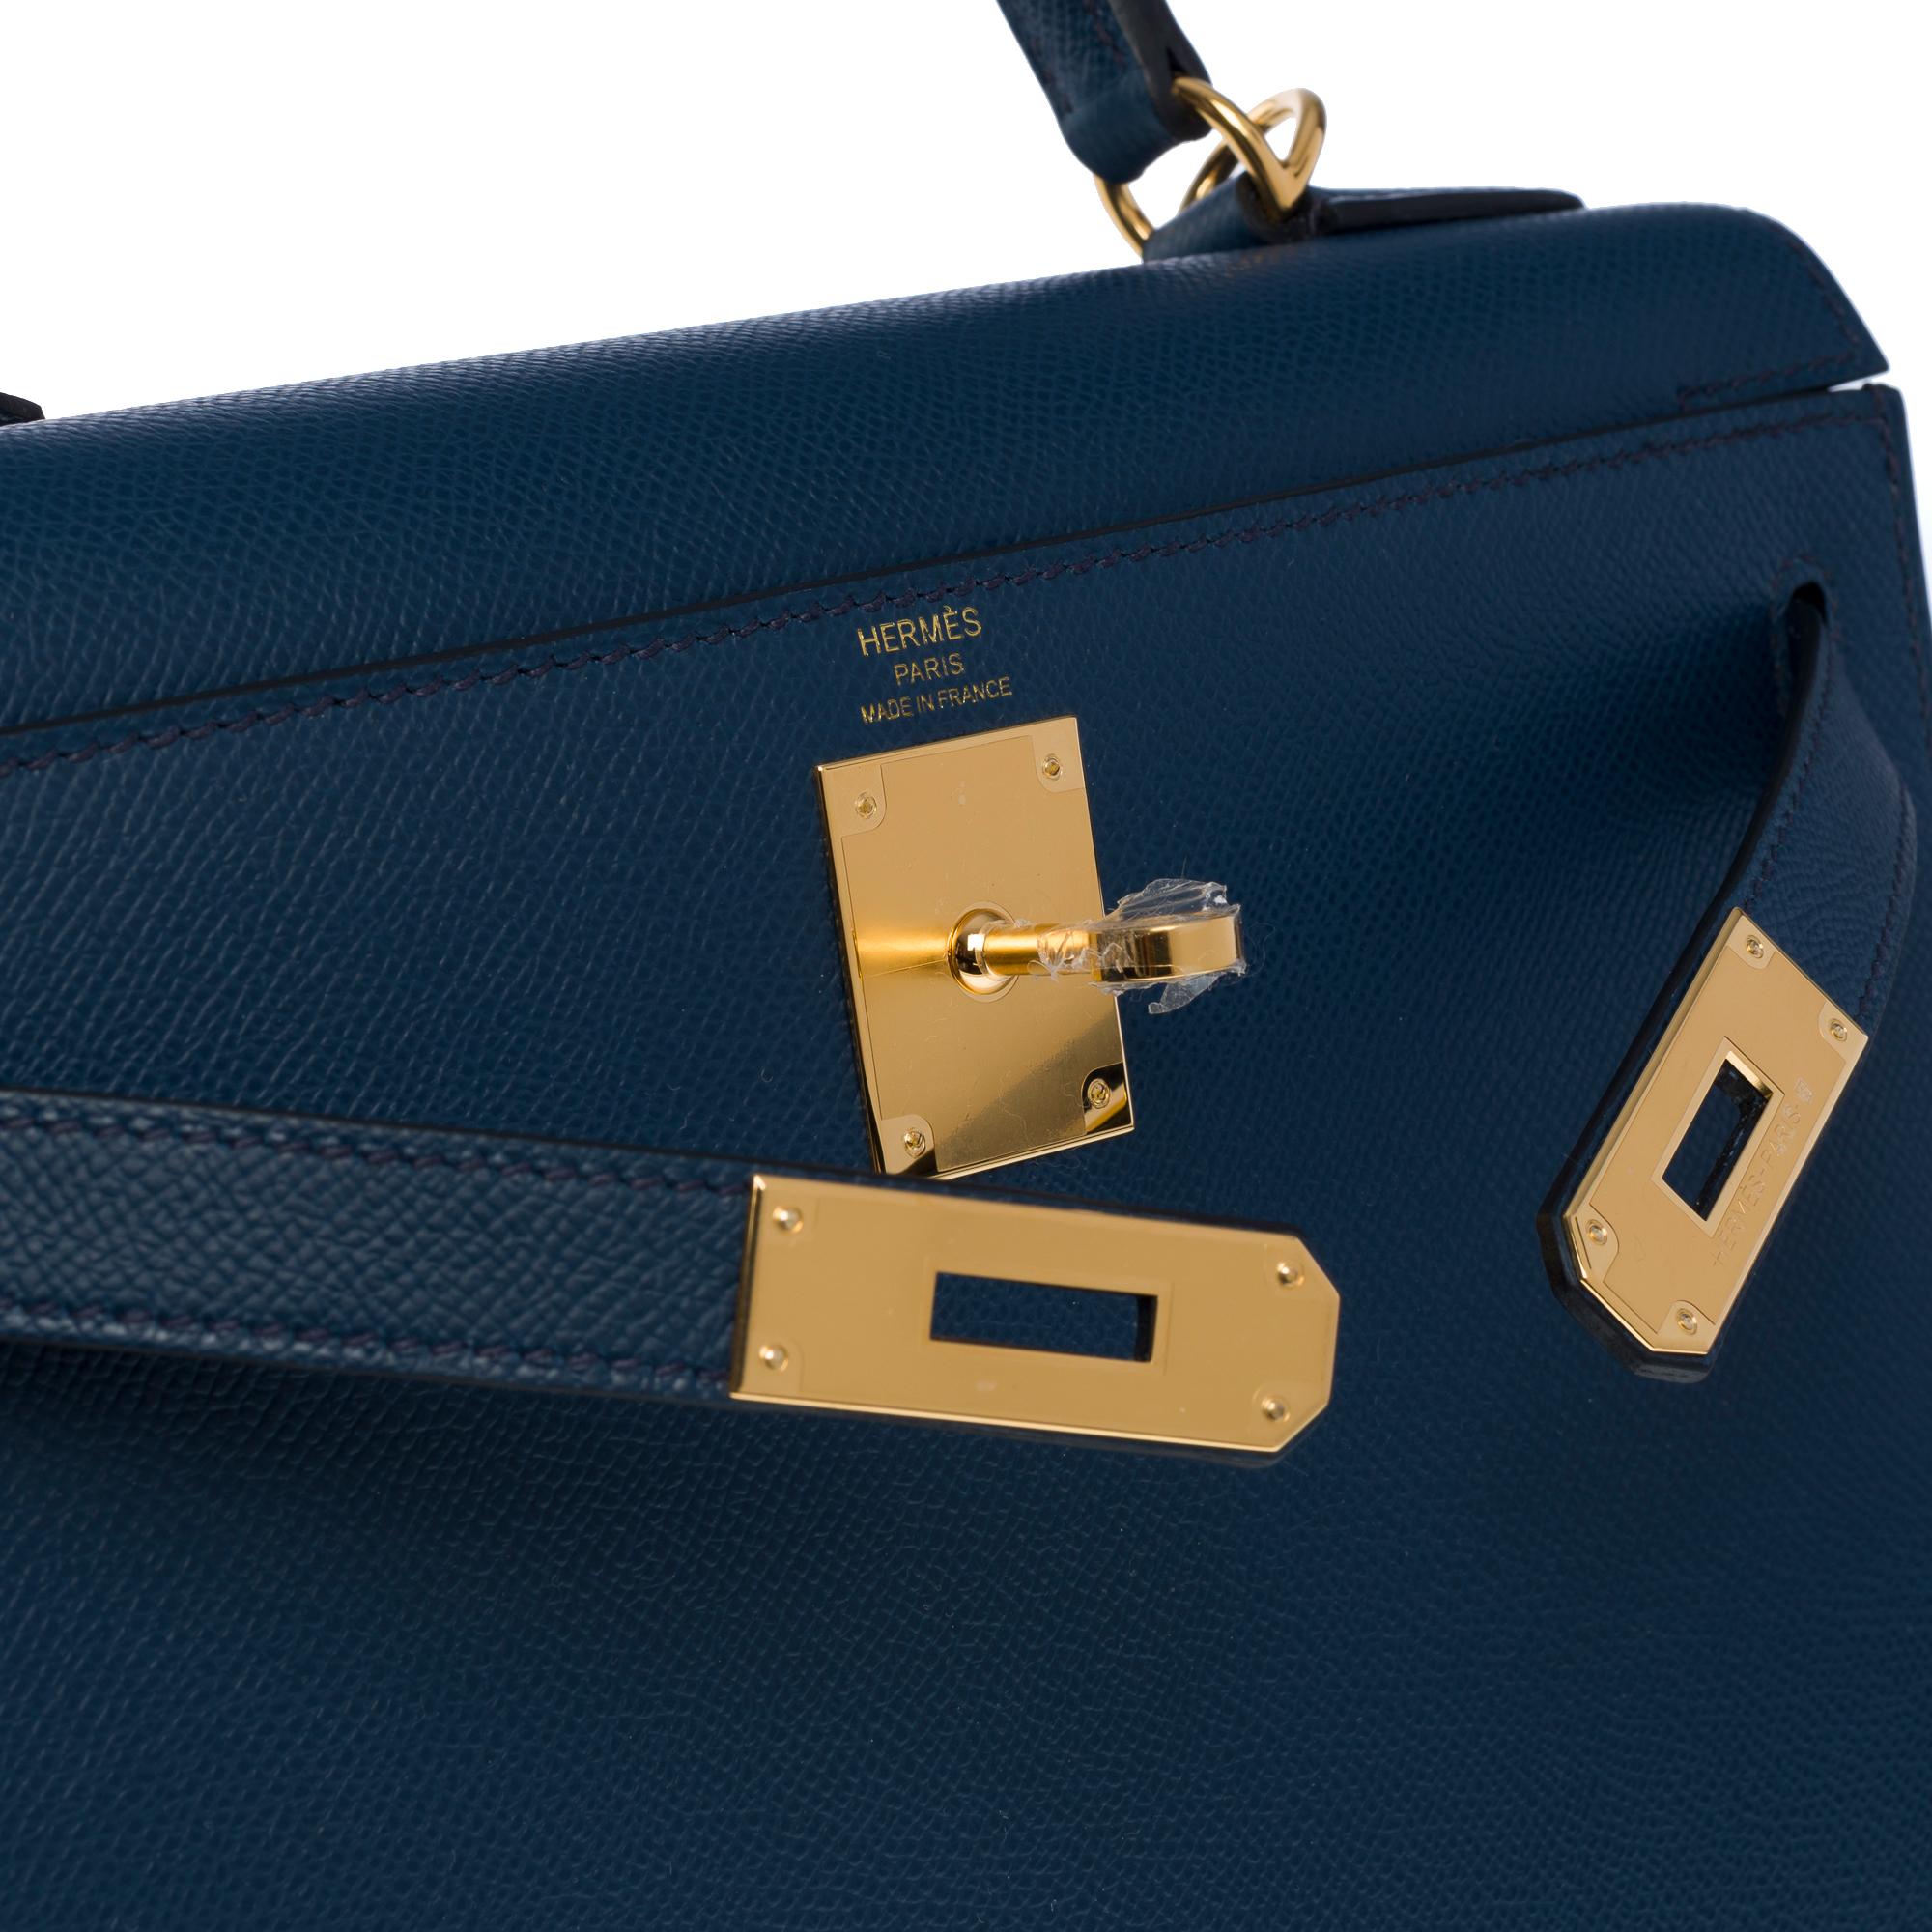 New Hermès Kelly 28 sellier handbag strap in Prussian blue Epsom leather, GHW 2